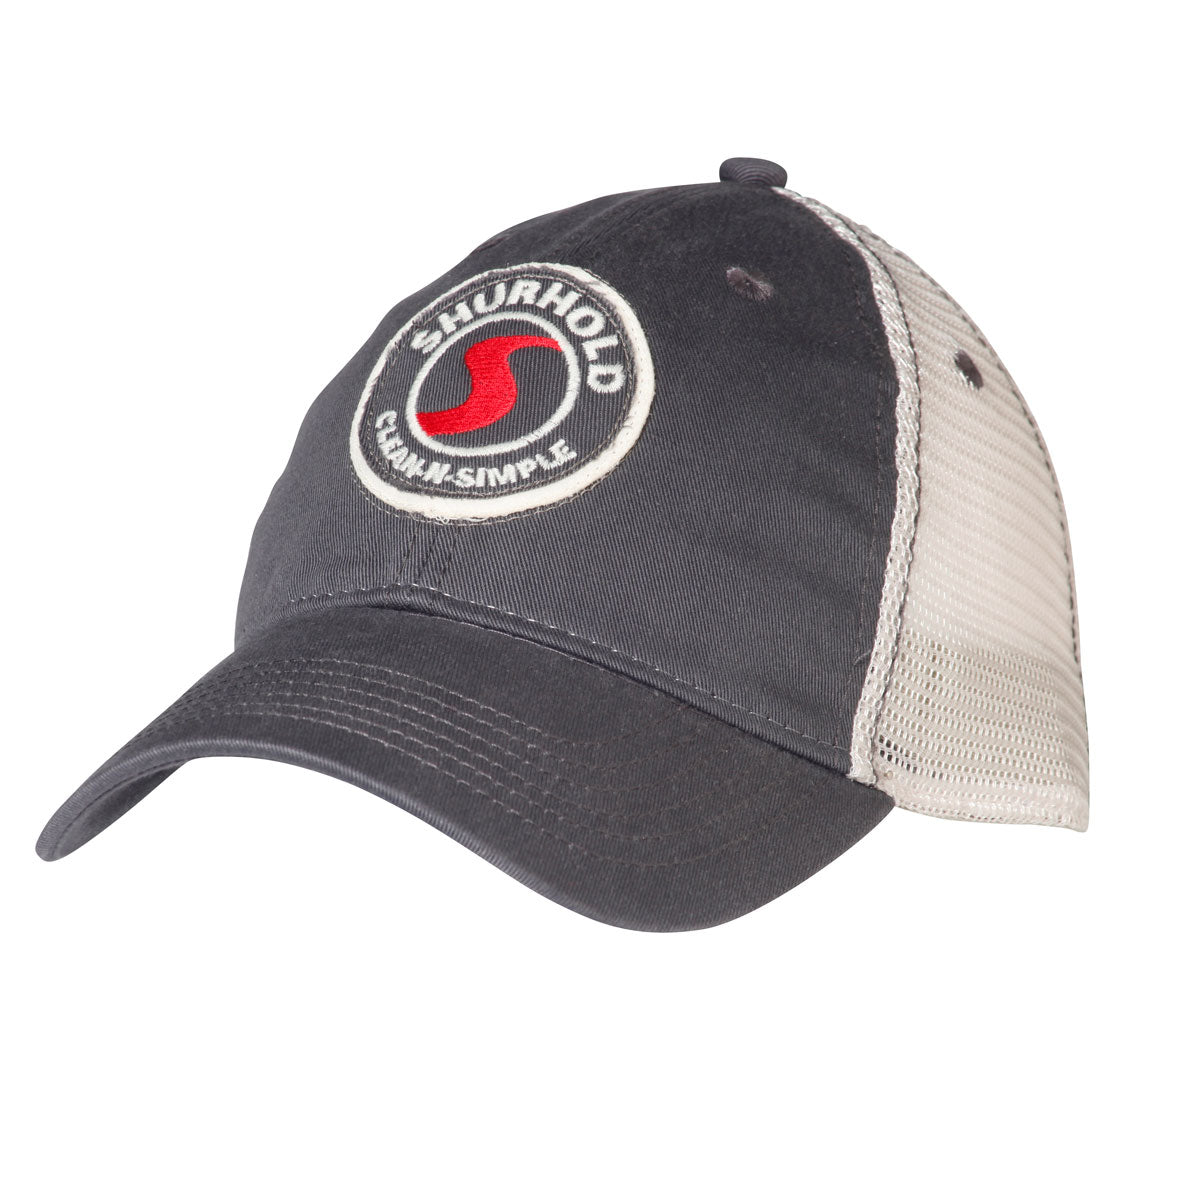 Shurhold Retro Gray Trucker Style Hat - Shurhold Industries, Inc.